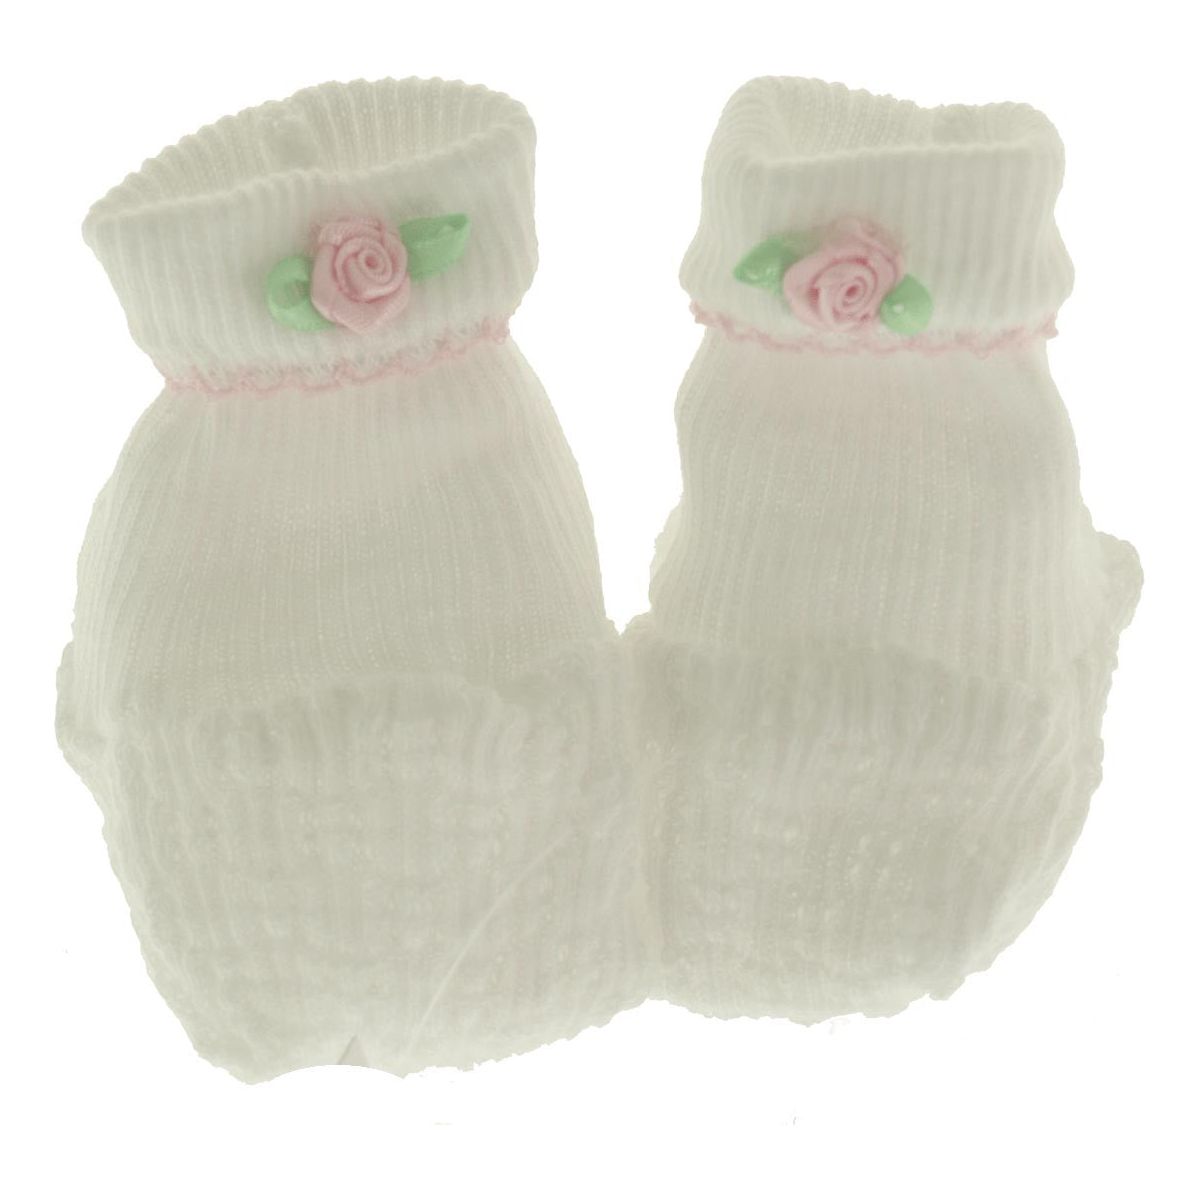 Newborn Girls White Cotton Baby Booties with Rose